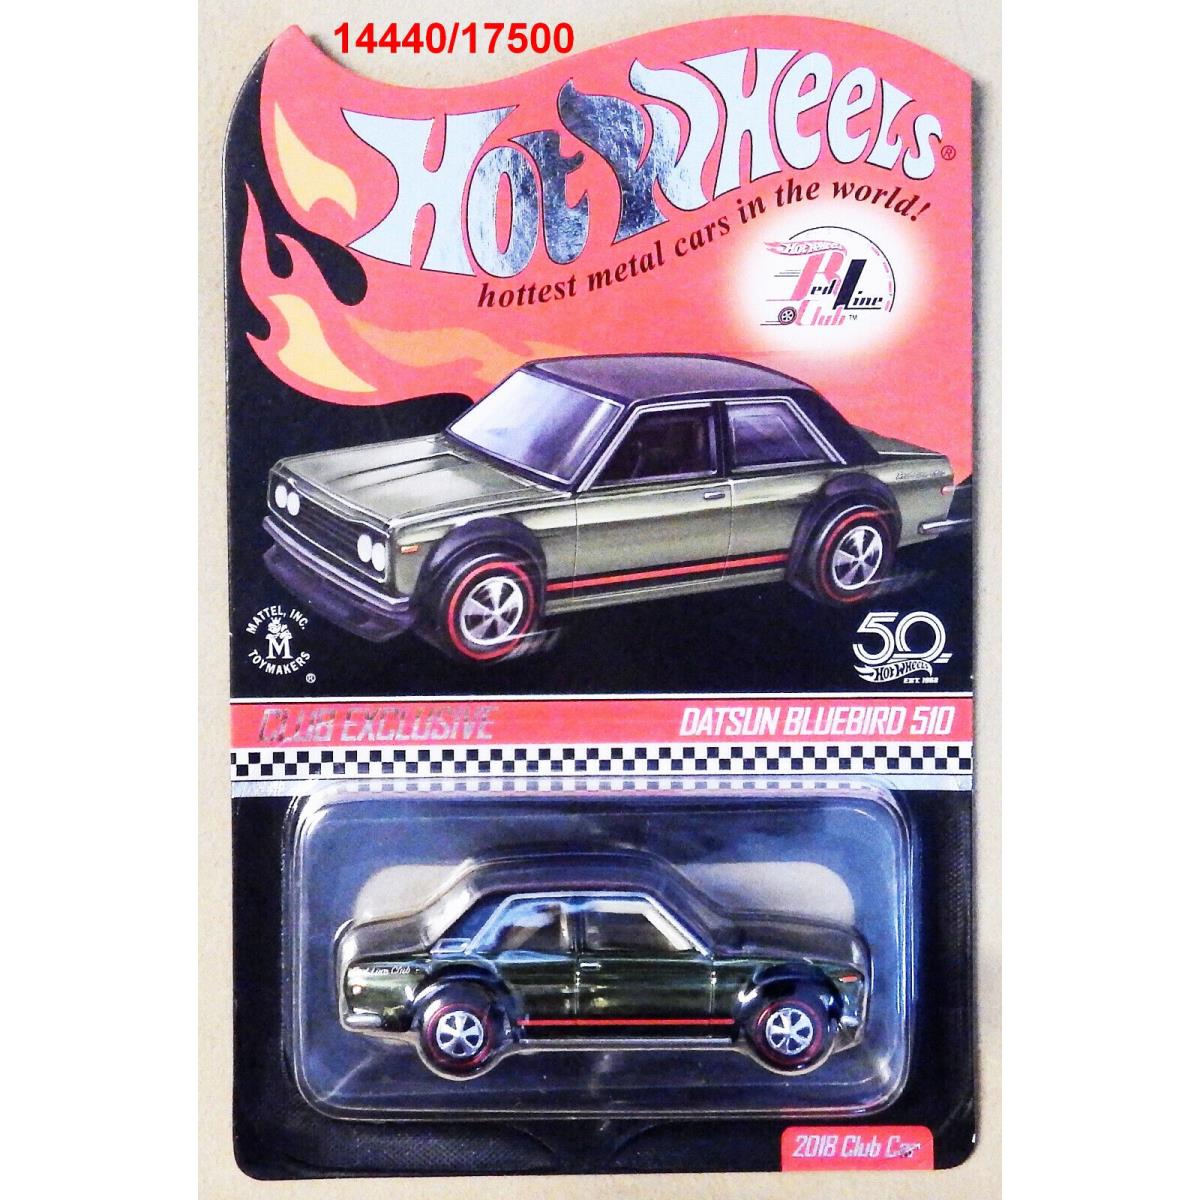 Hot Wheels Rlc 1971 Datsun Bluebird 510 Pick Your Car S Red Line Club 2018-Green 14440/17500